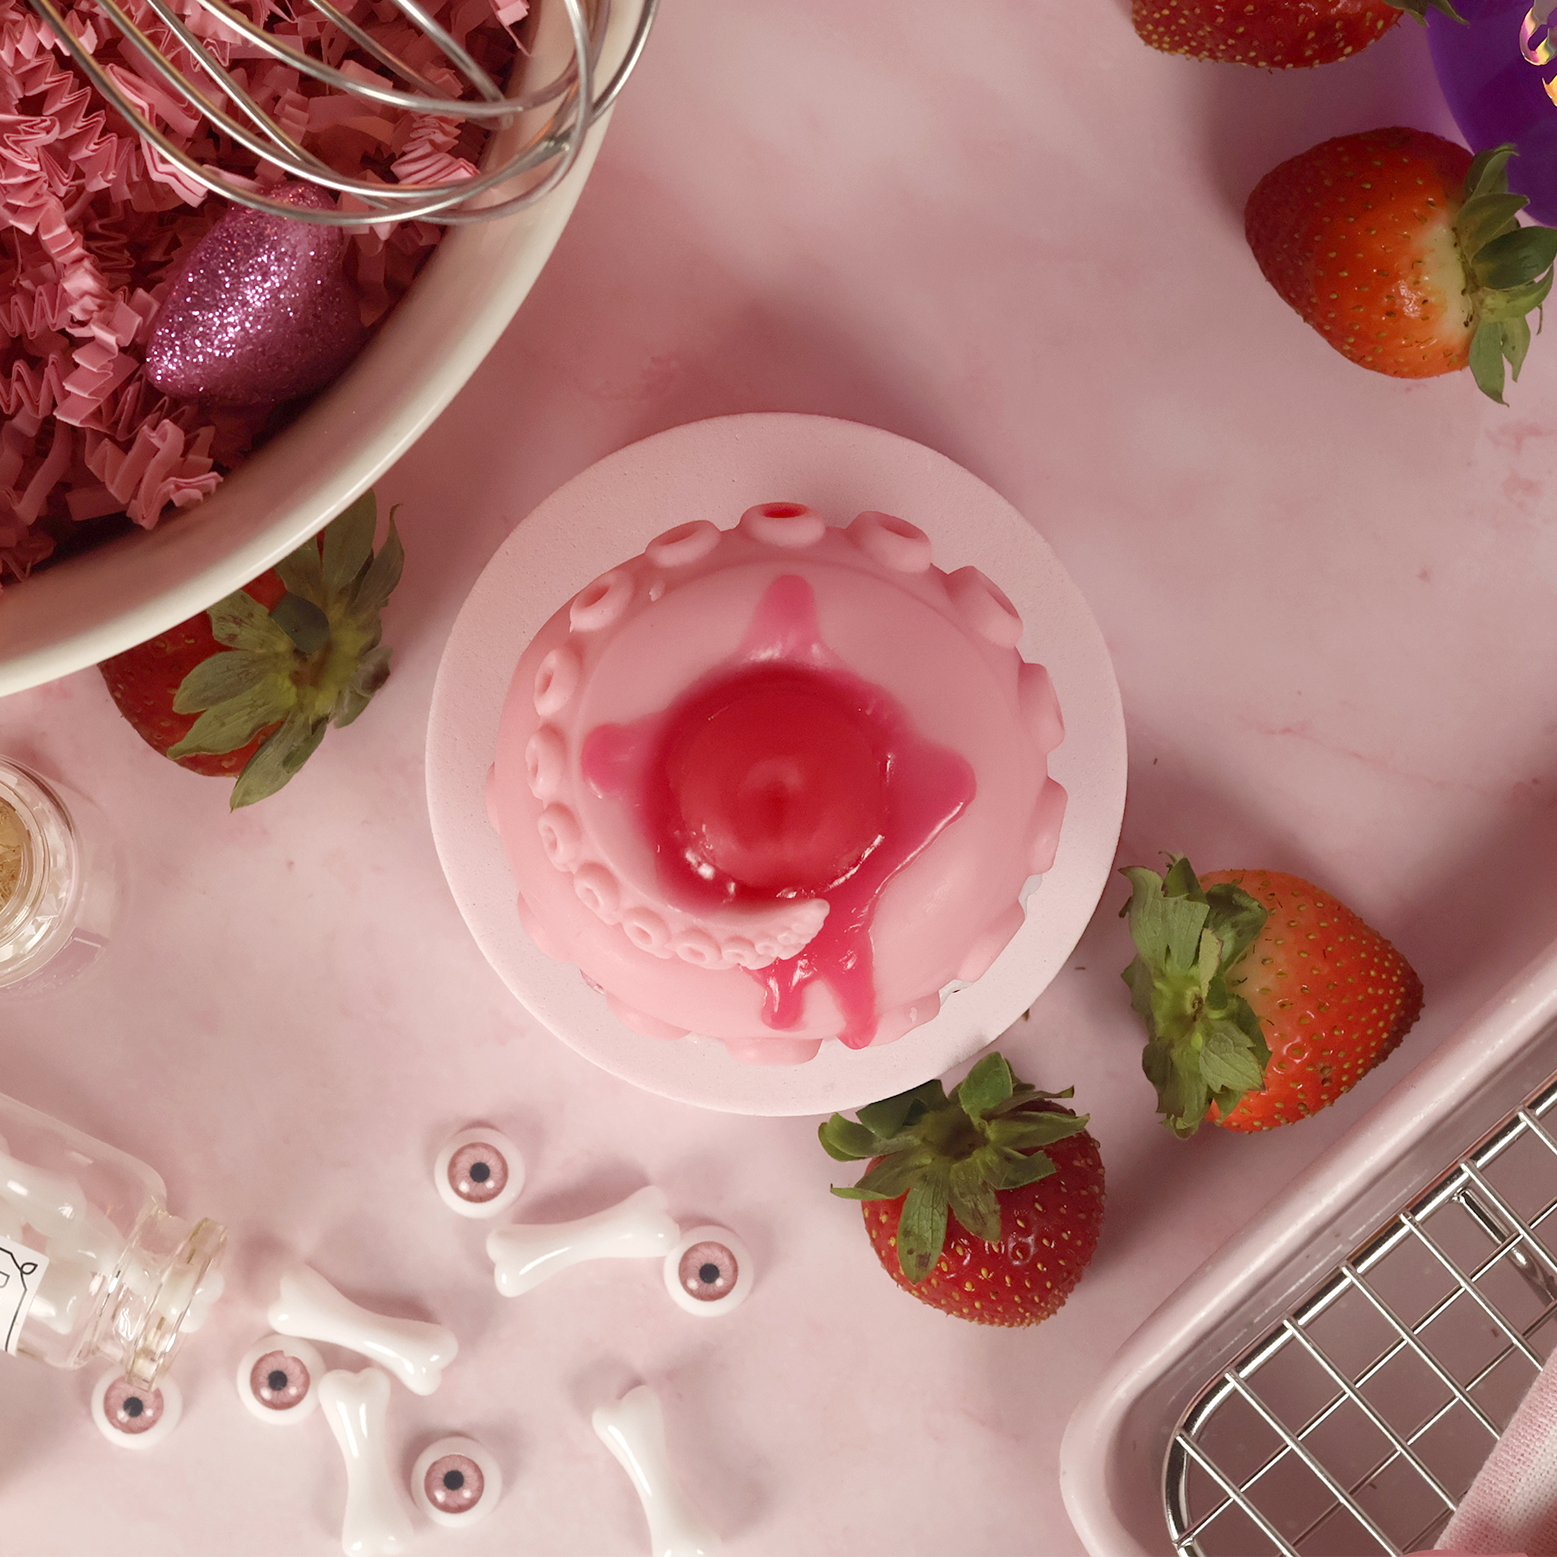 Strawberry Tentacle Cupcake